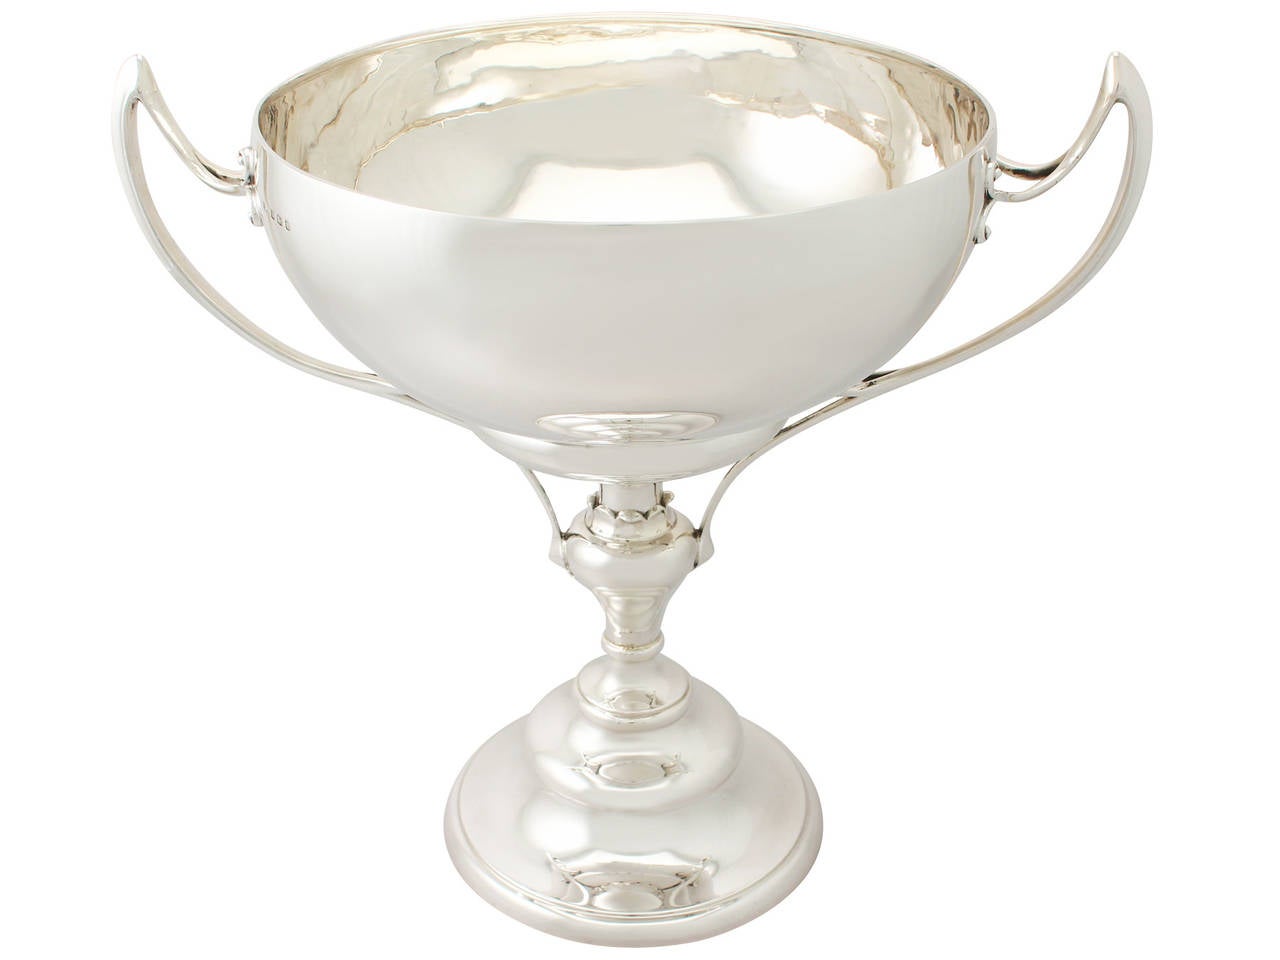 English Sterling Silver Presentation Cup/Bowl - Art Nouveau Style - Antique George V